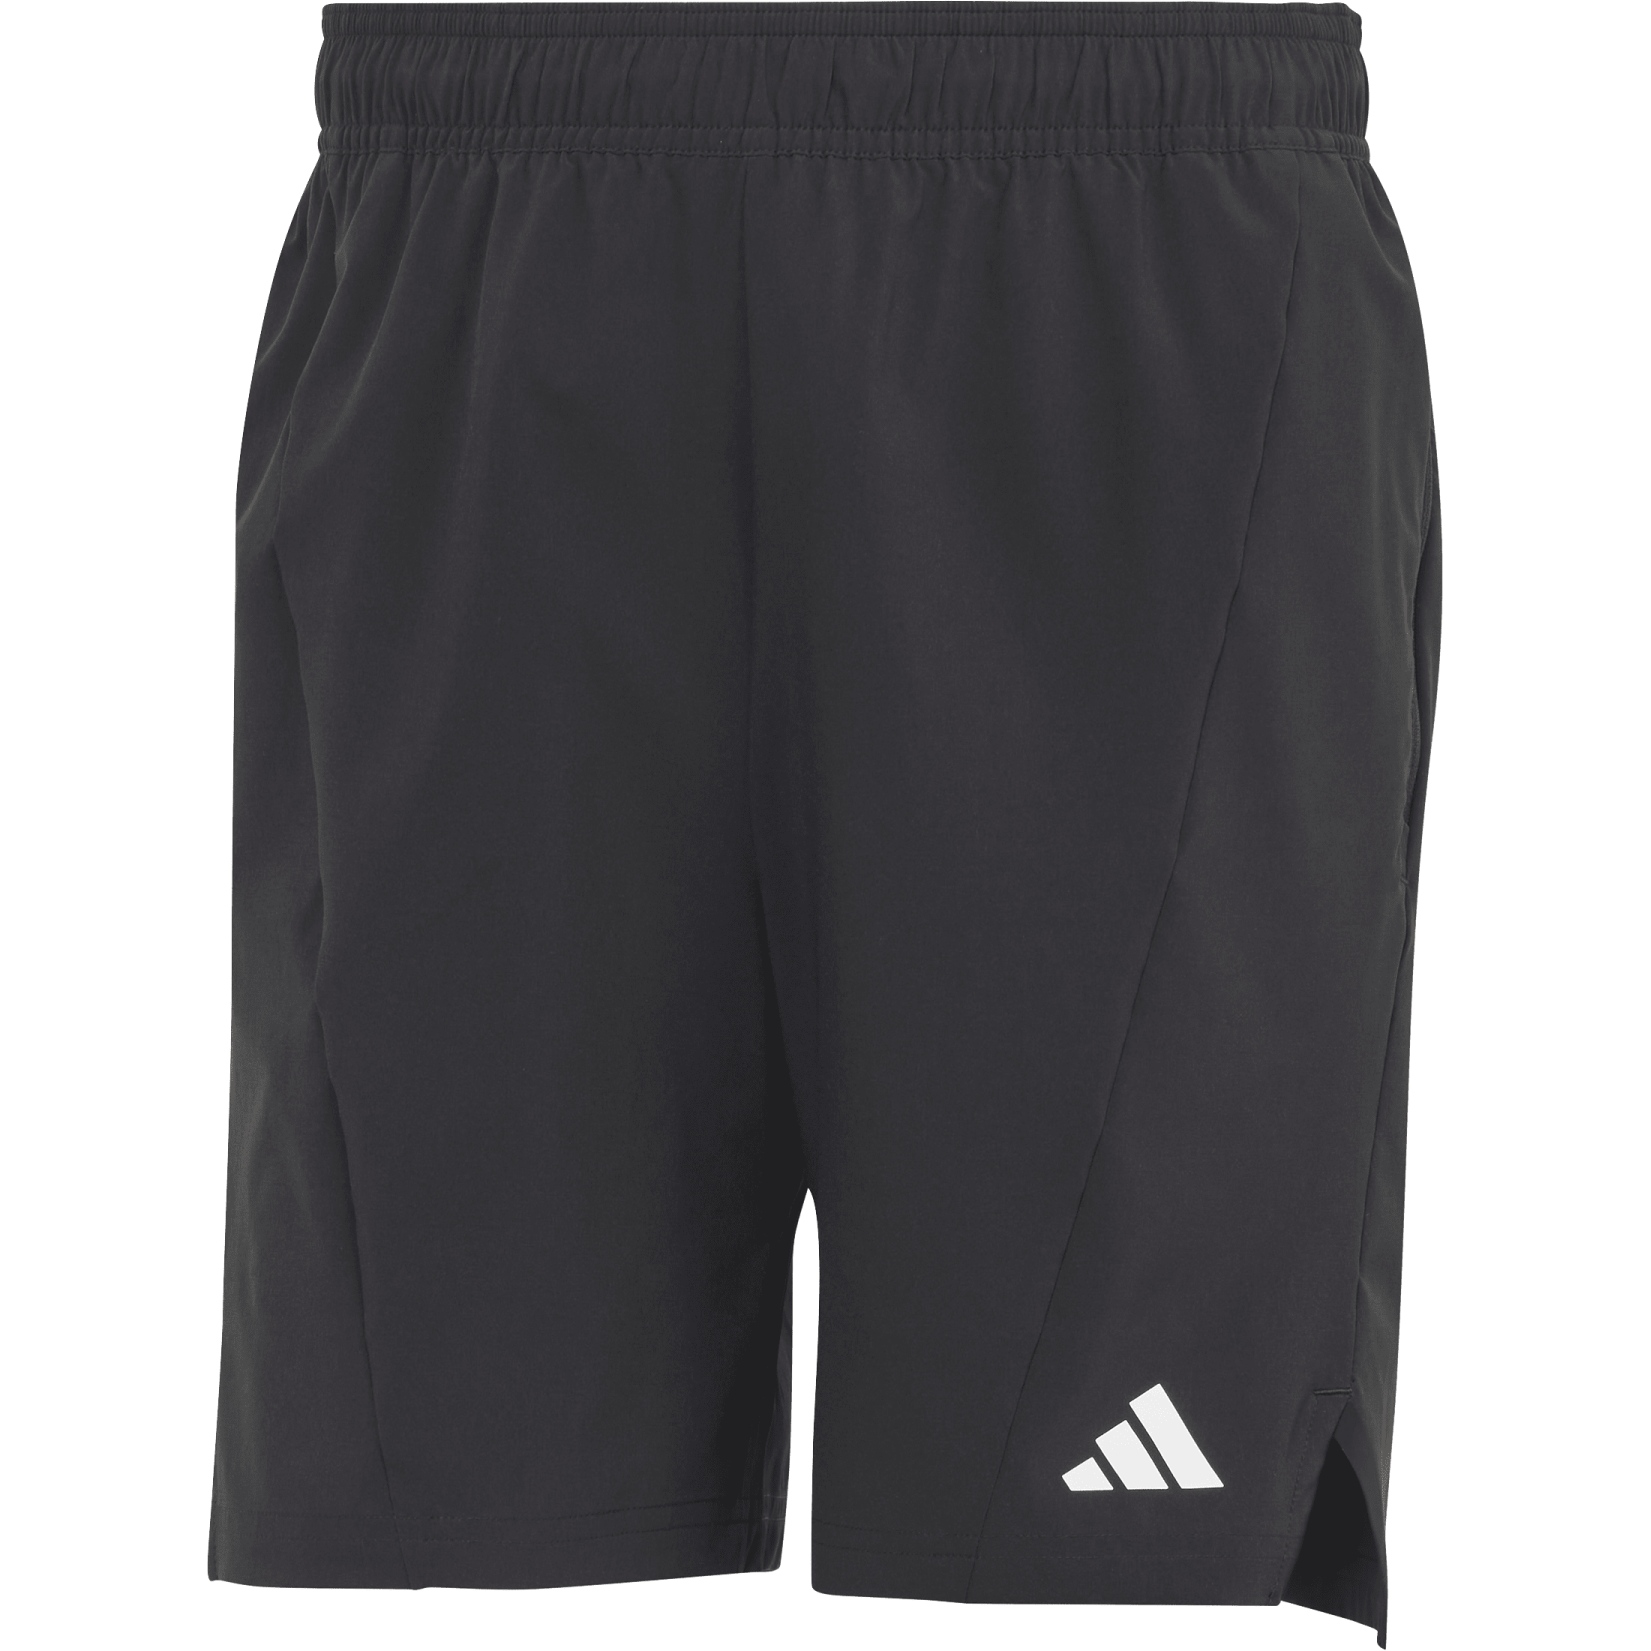 Productfoto van adidas Designed for Training Workout Shorts Men - black IK9723